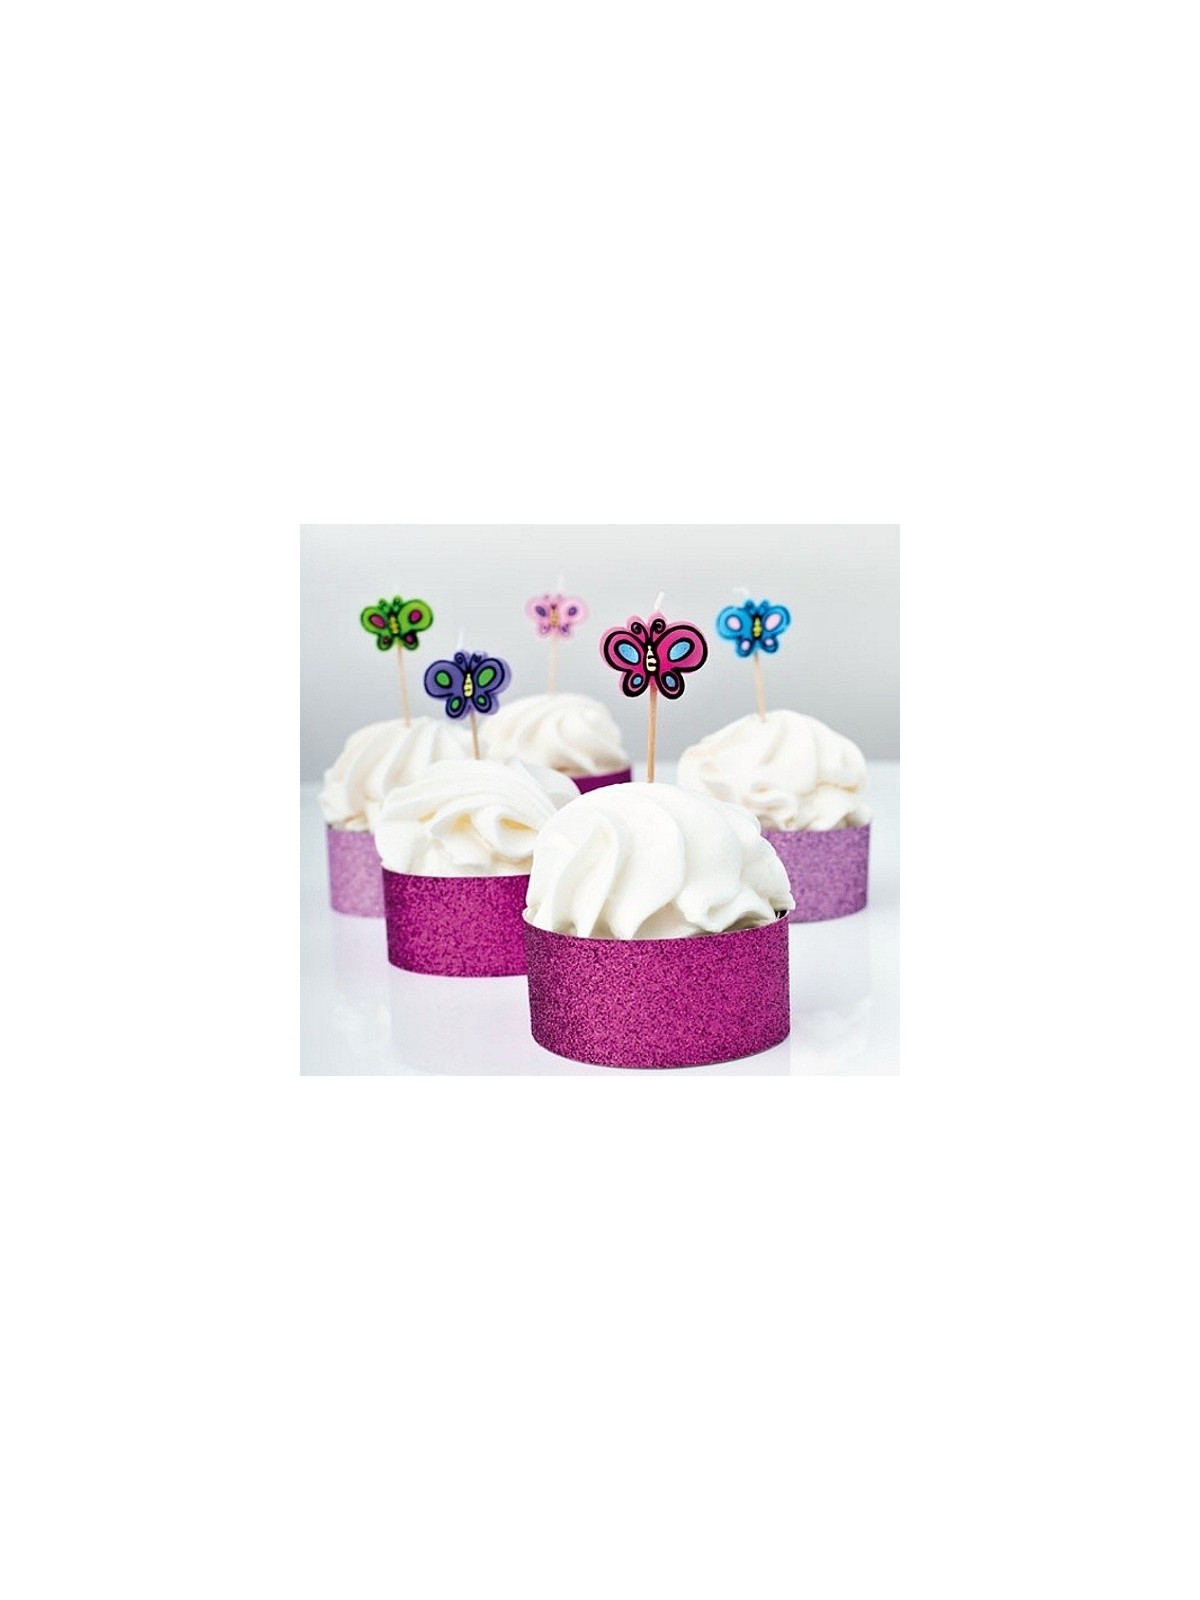 Cake candle Butterflies - 5pcs